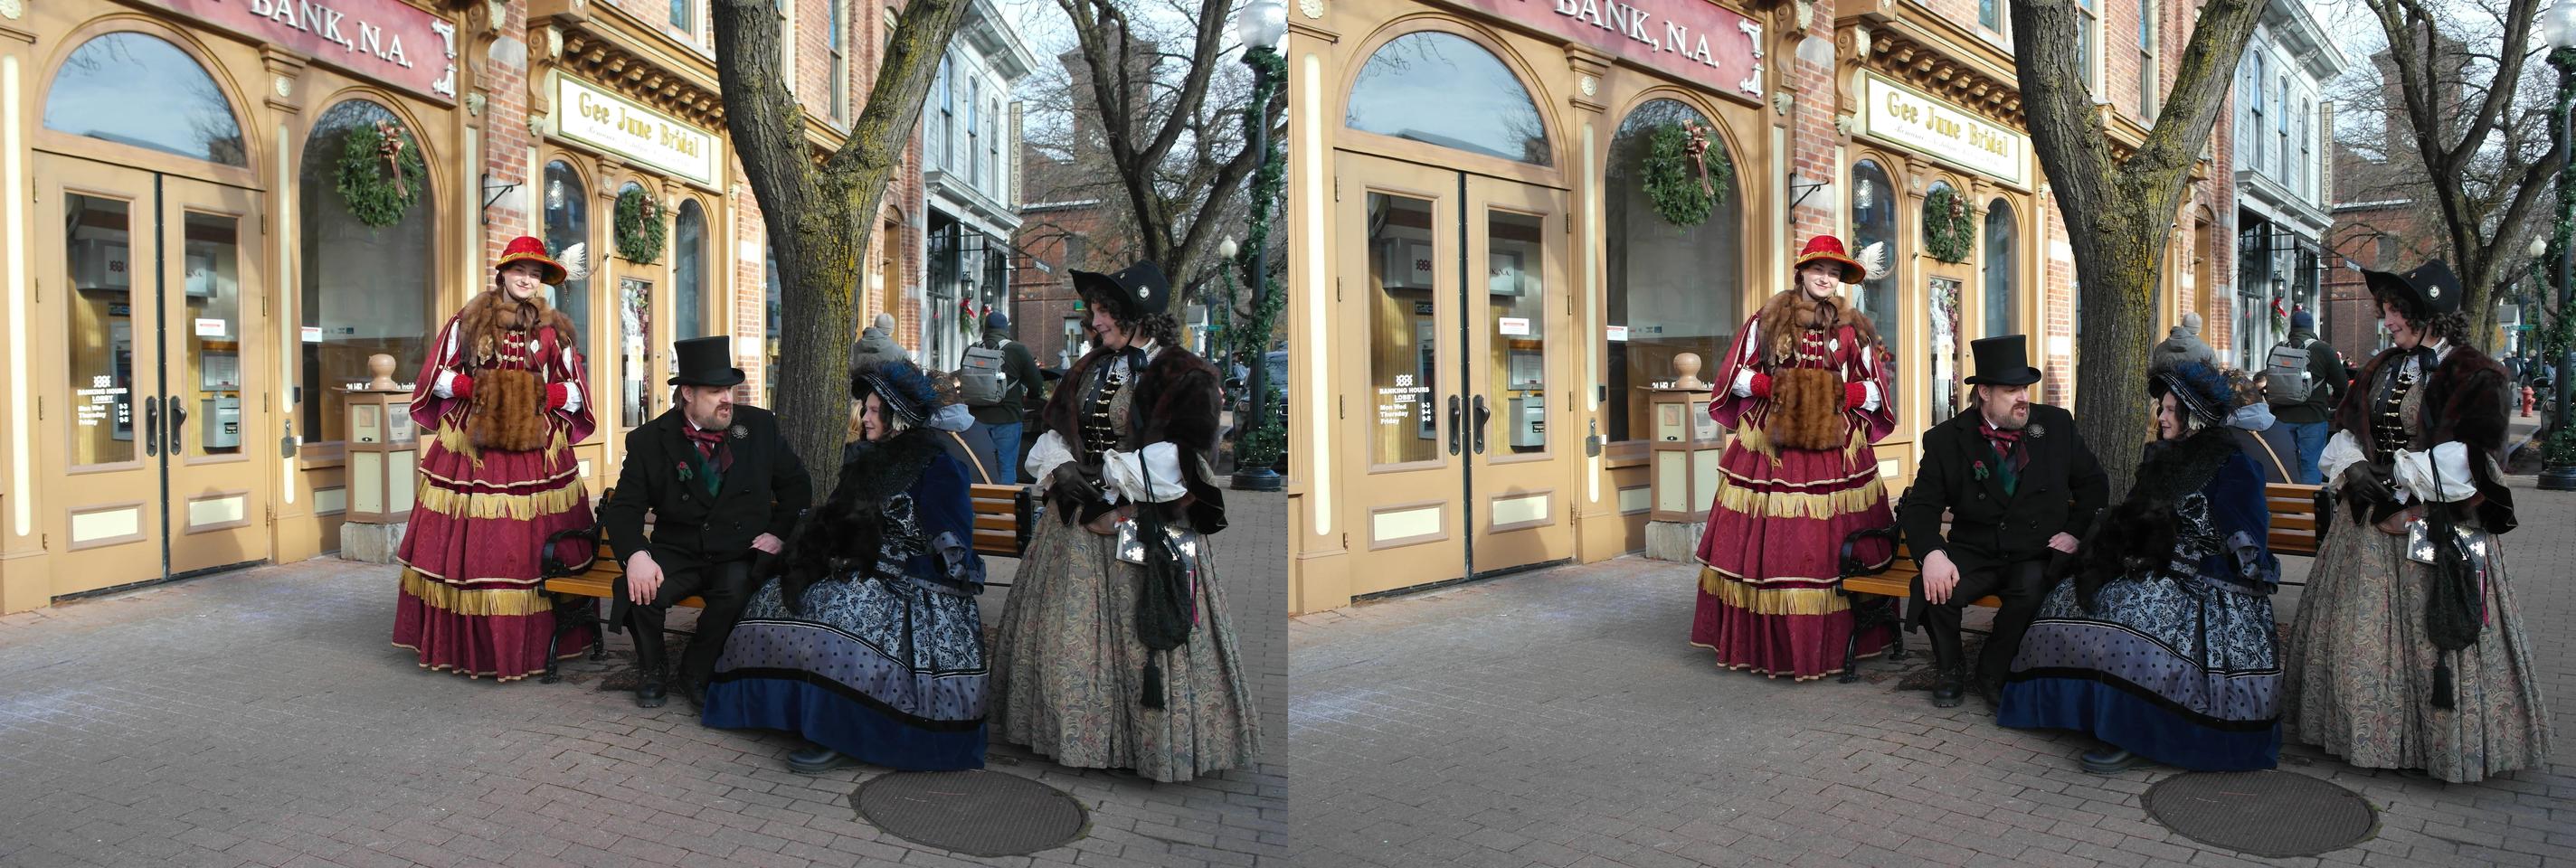 Dickens Christmas characters on historic Skaneateles mainstreet